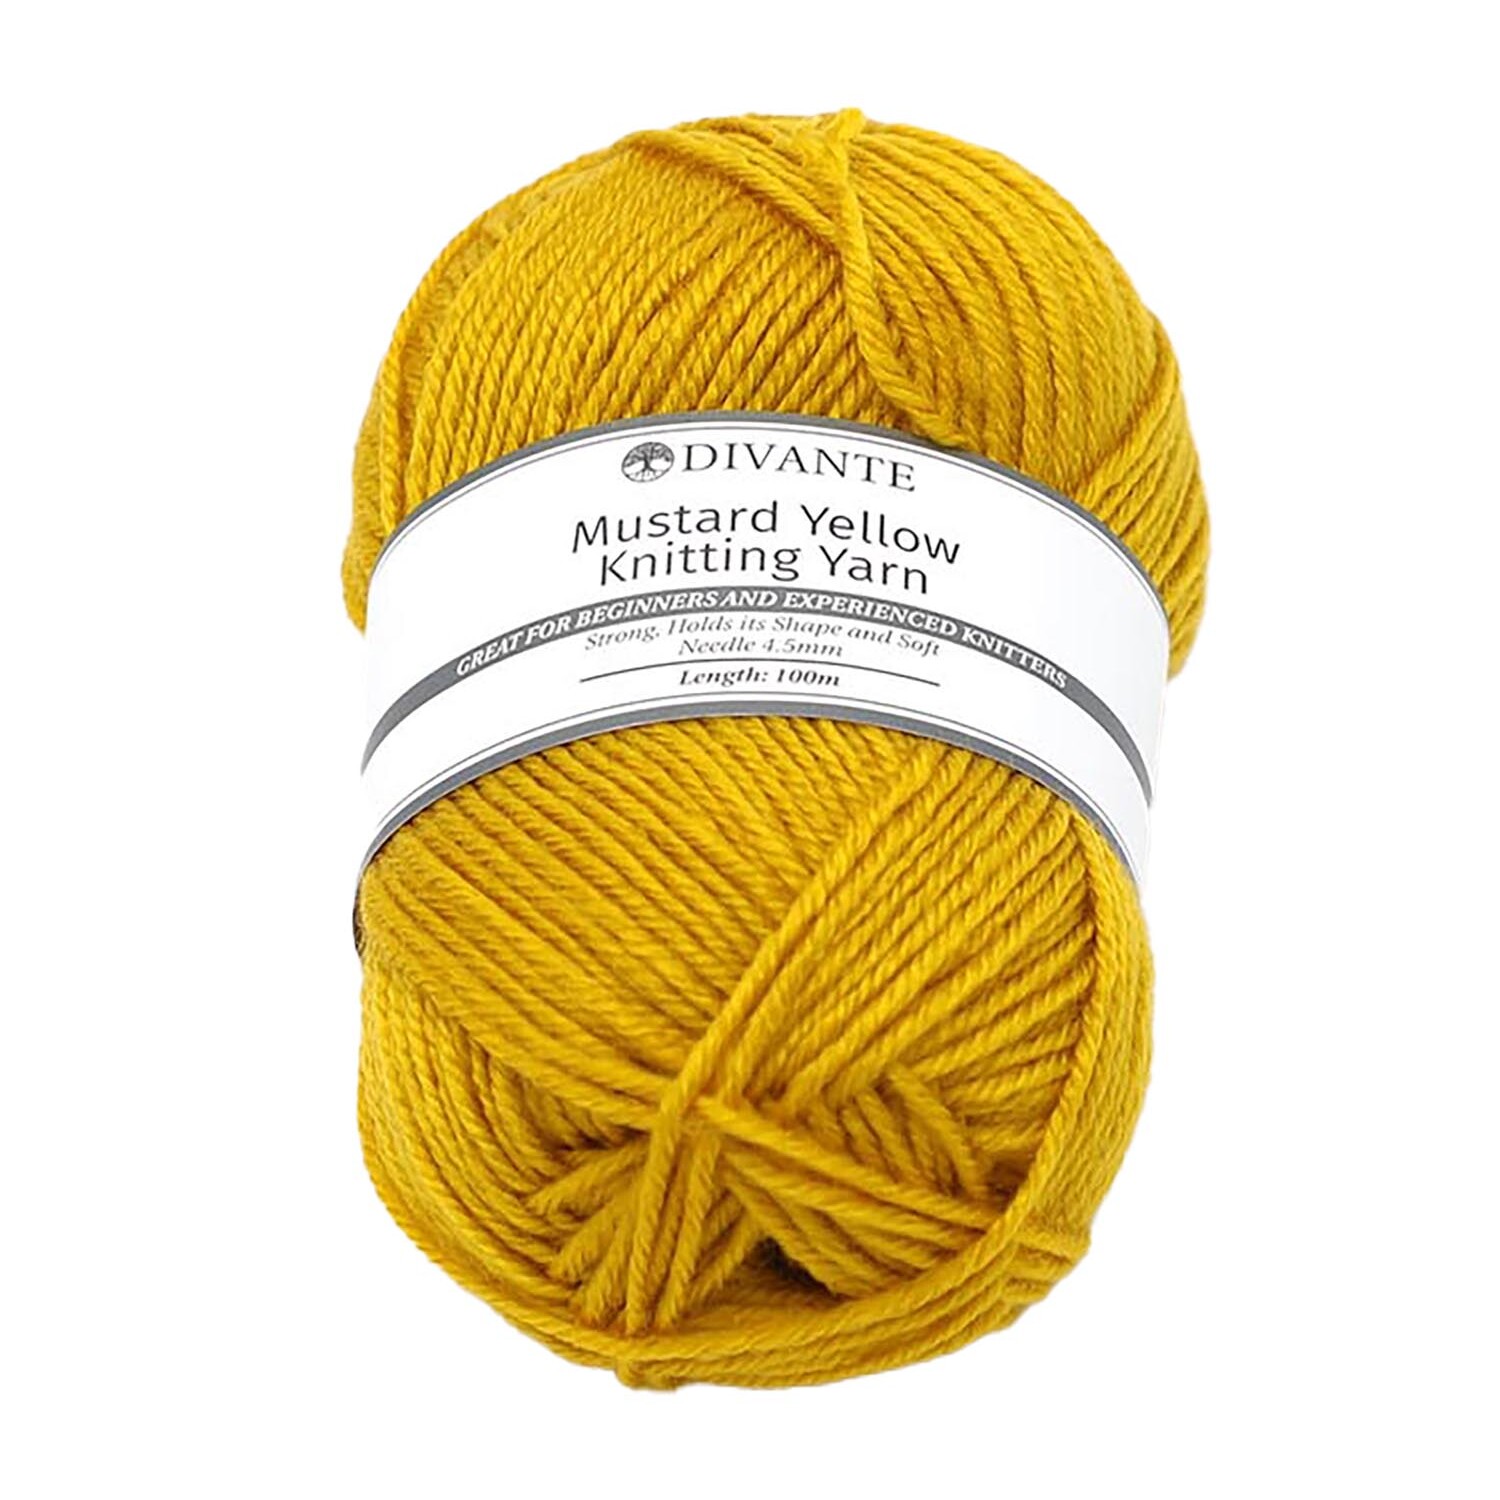 Divante Value Knitting Yarn - Mustard Yellow Image